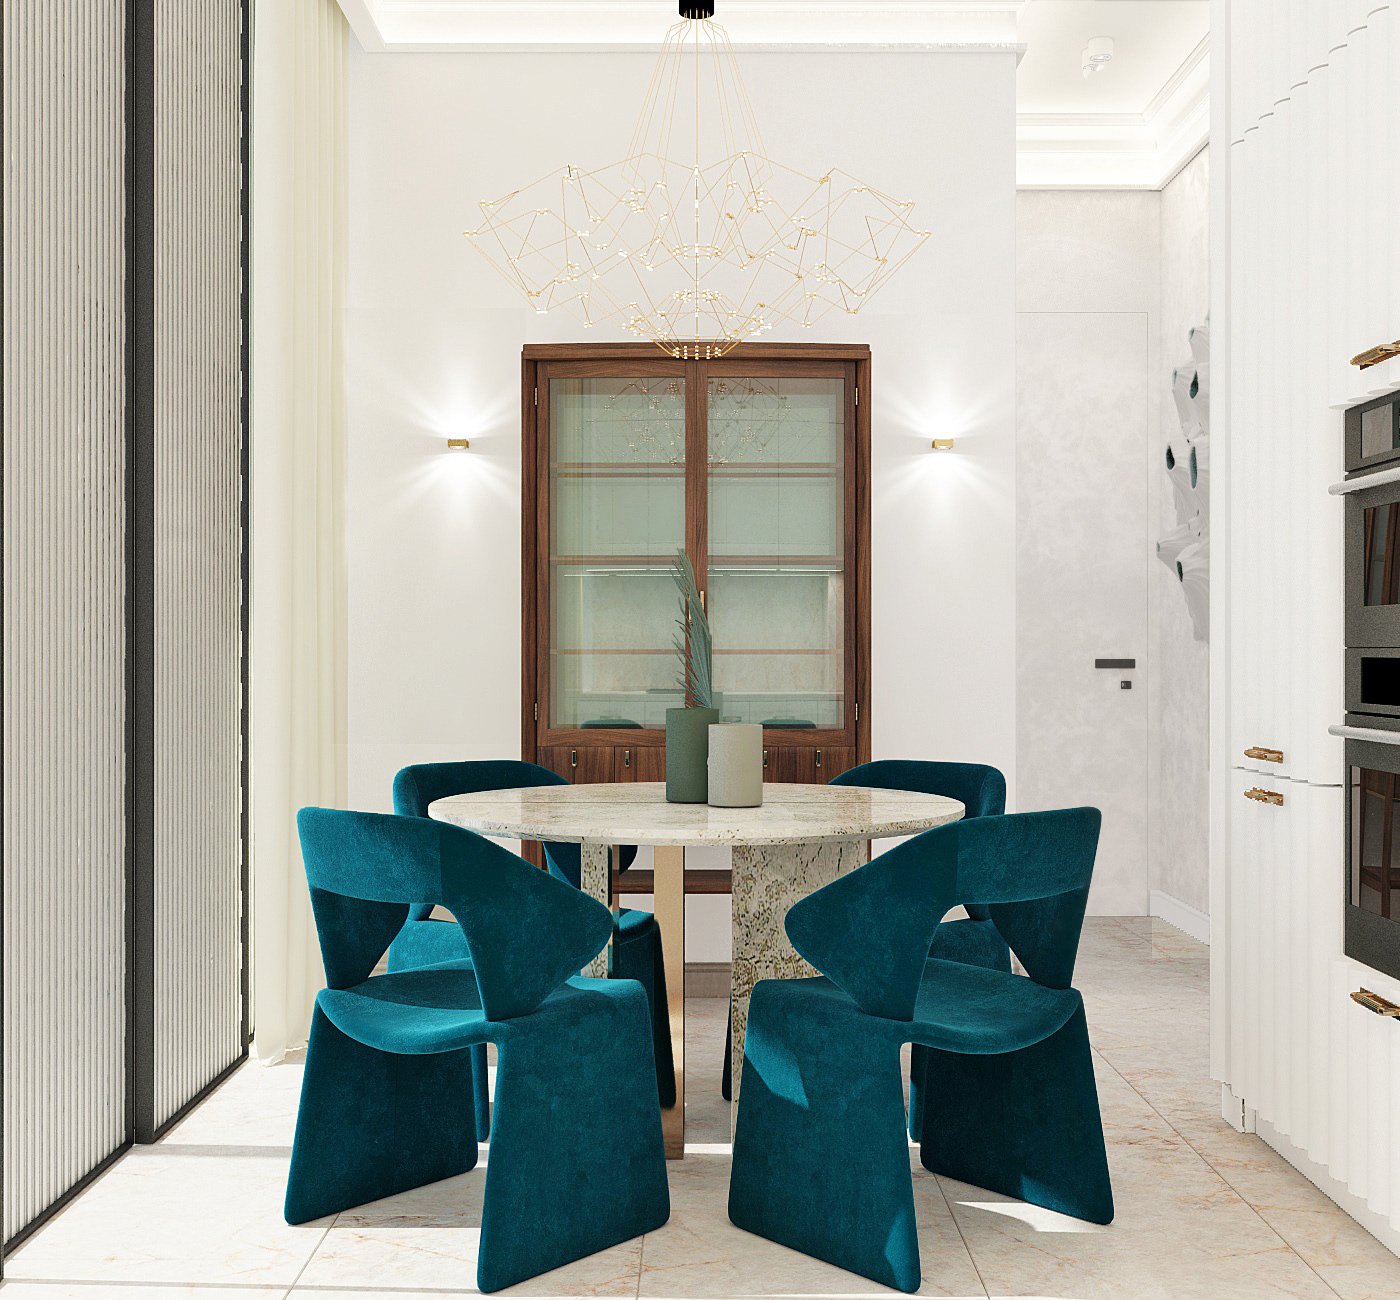 3D 3dmodel apartement architecture interior design  INTERIOR RENDERING Render Residential interior visualization visualization3d